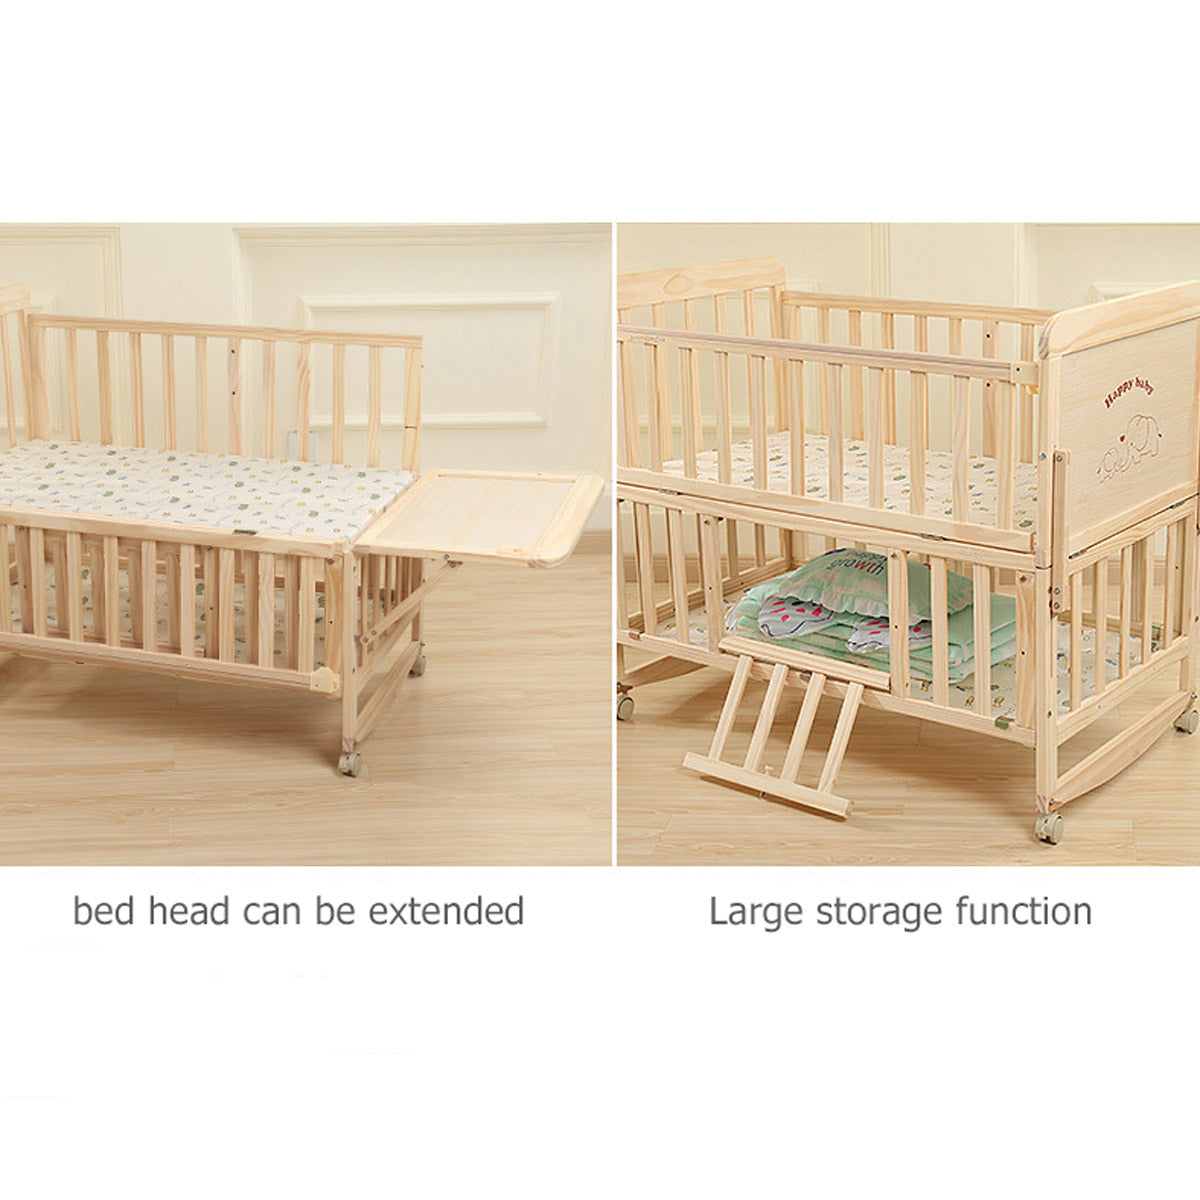 POLKA TOTS Elegant Wooden Rocking Cradle Baby Crib Cot / Kids Toddler Multifunctional Adjustable Bedding set with Mosquito net